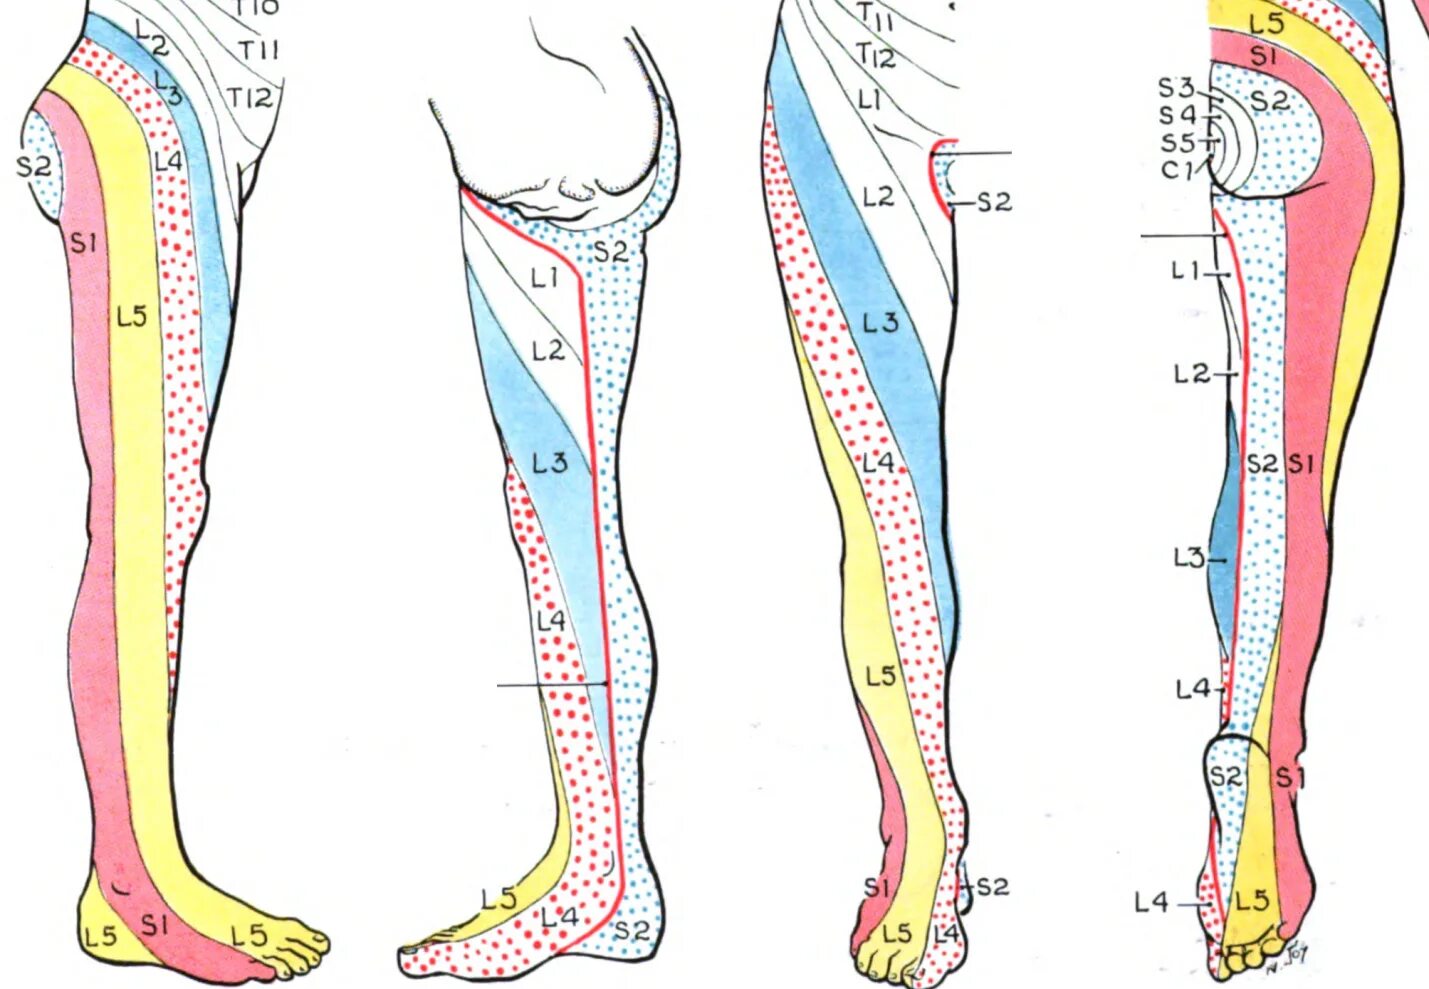 Болит нога после операции грыжи позвоночника. Радикулопатия диска l3-l4. Дерматом l4-l5. Радикулопатия l5-s1. Иннервация грыжи l5-s1.